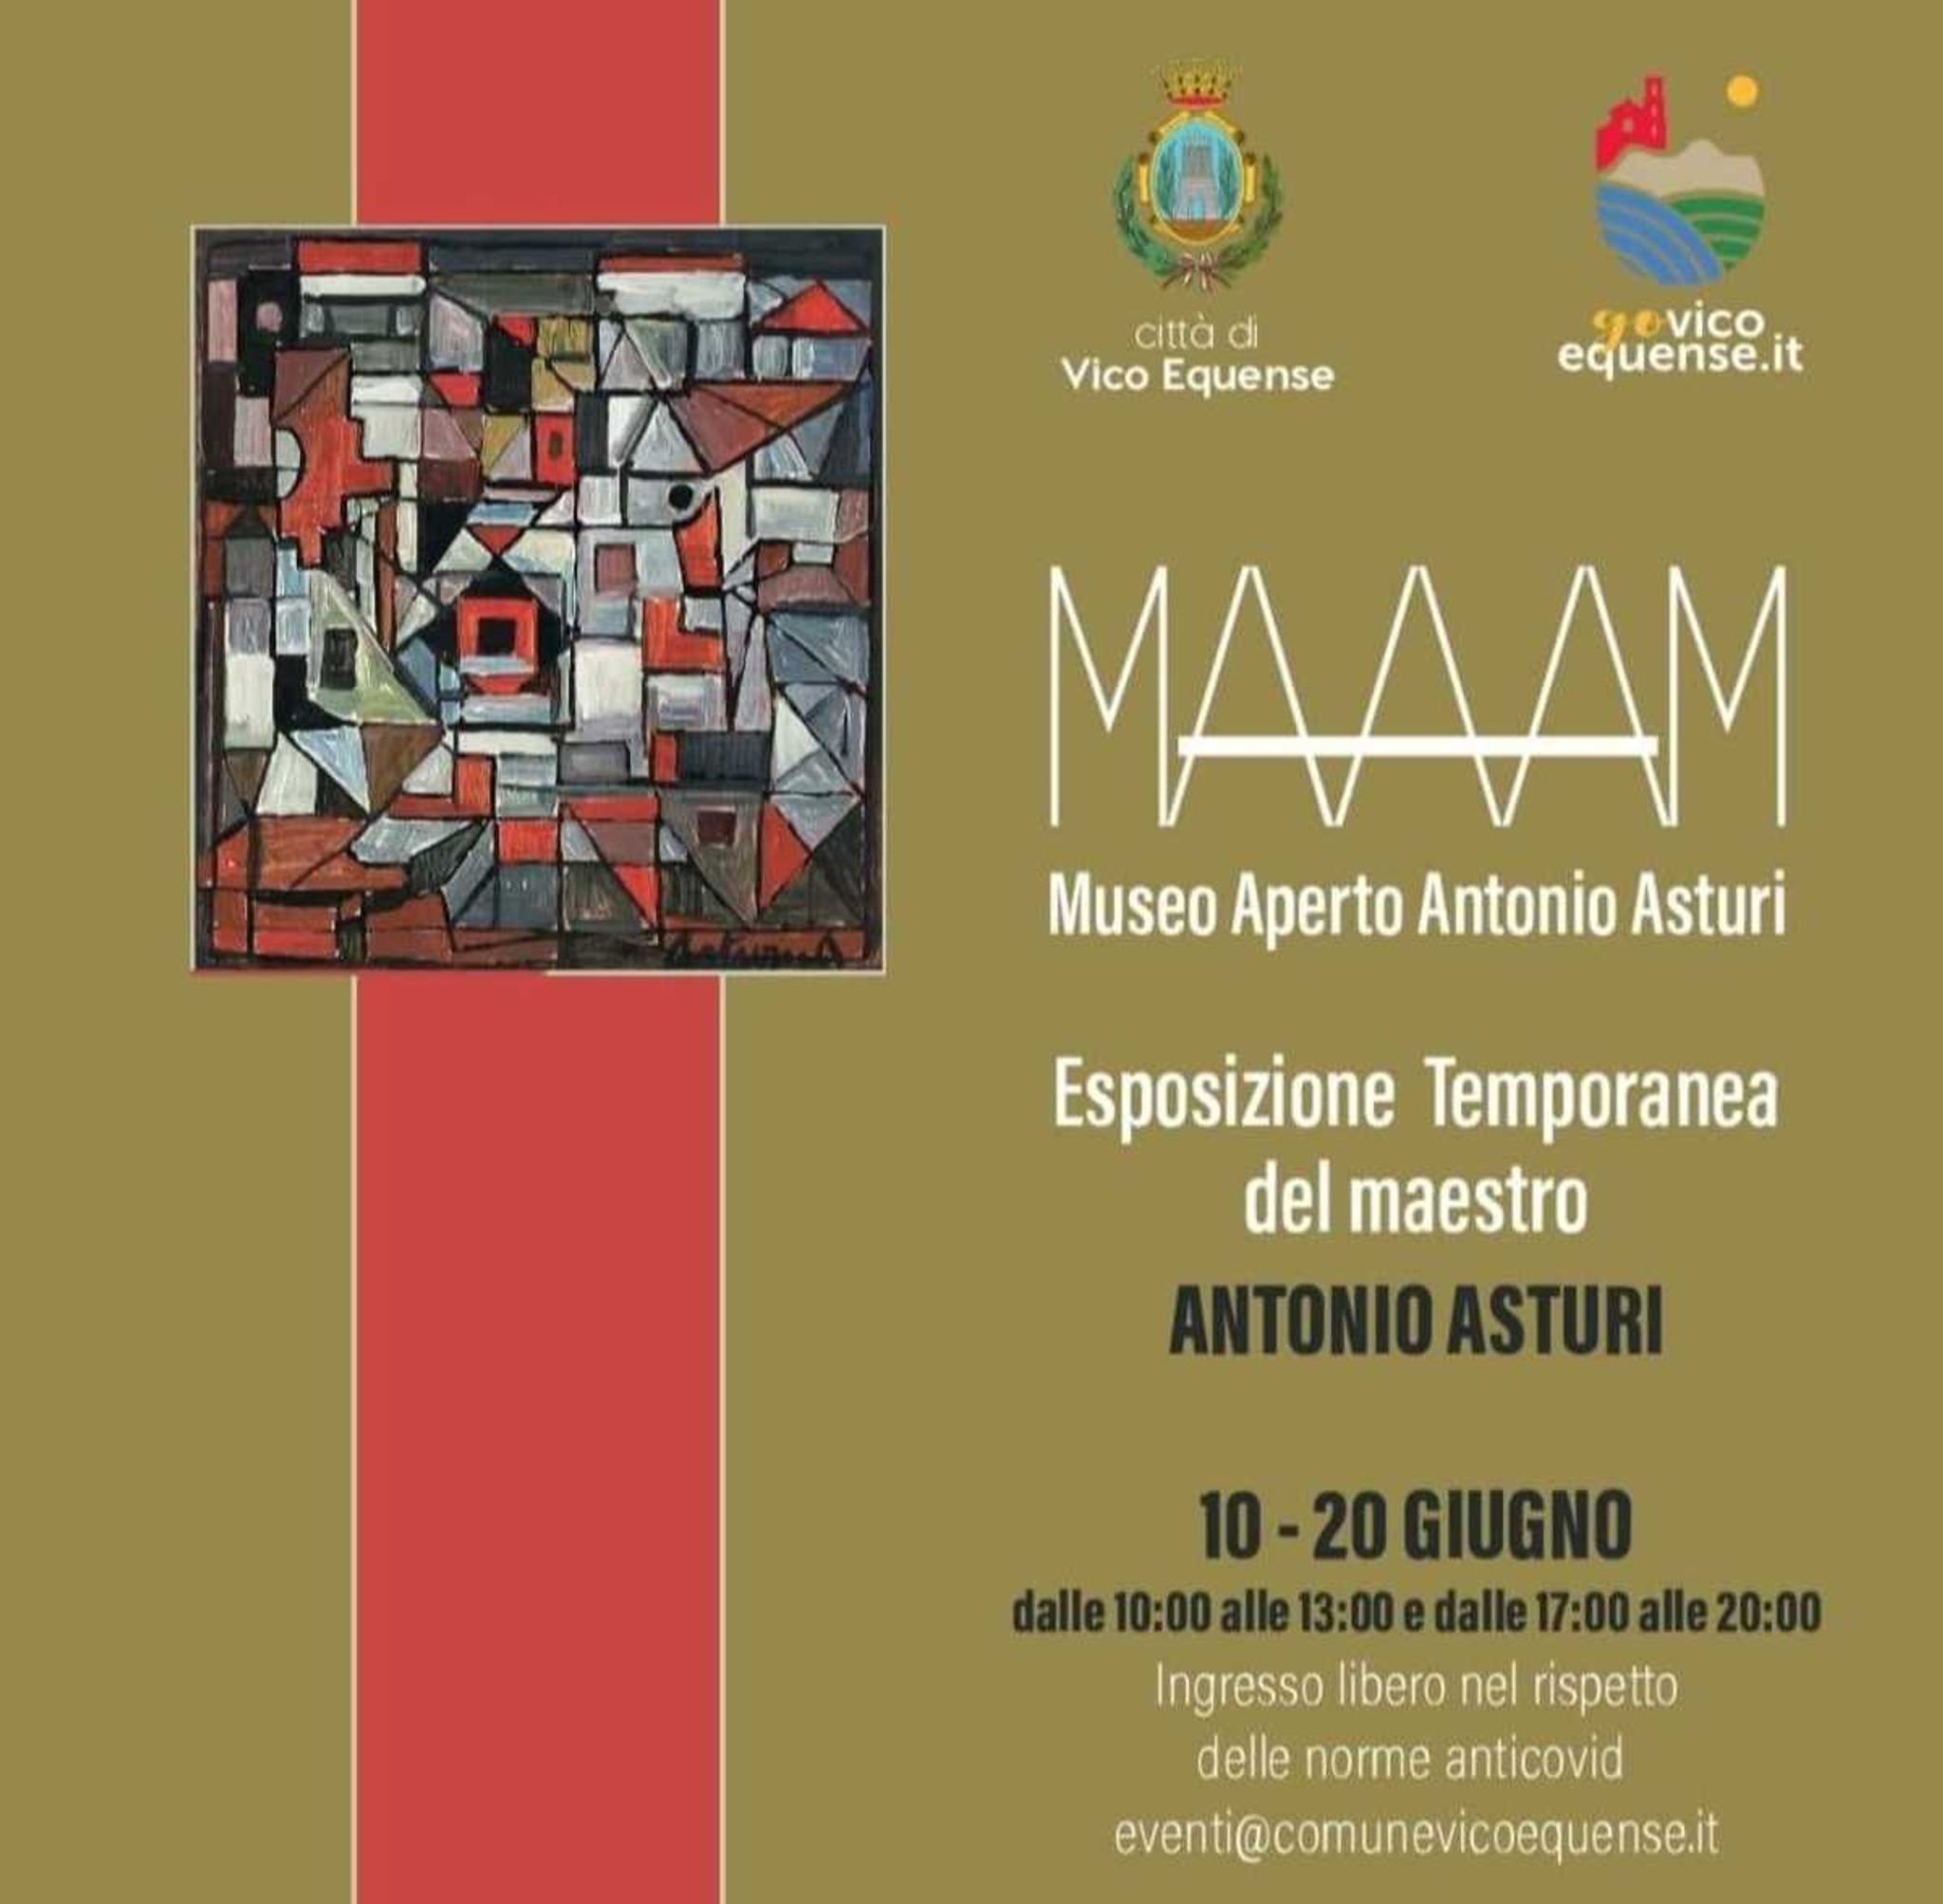 Temporary exhibition of the master Antonio Asturi